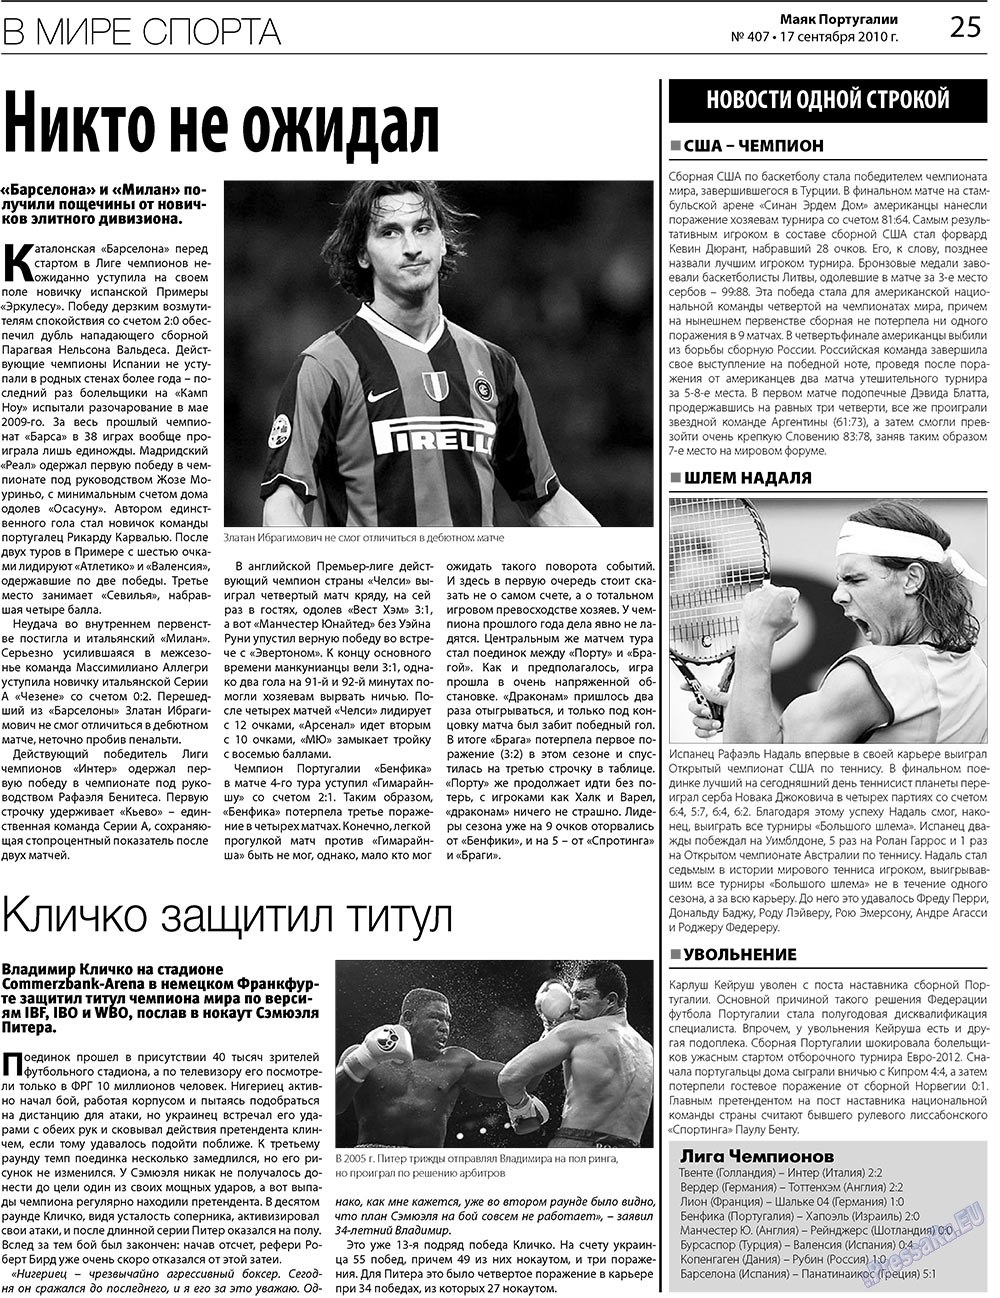 Маяк Португалии, газета. 2010 №407 стр.25